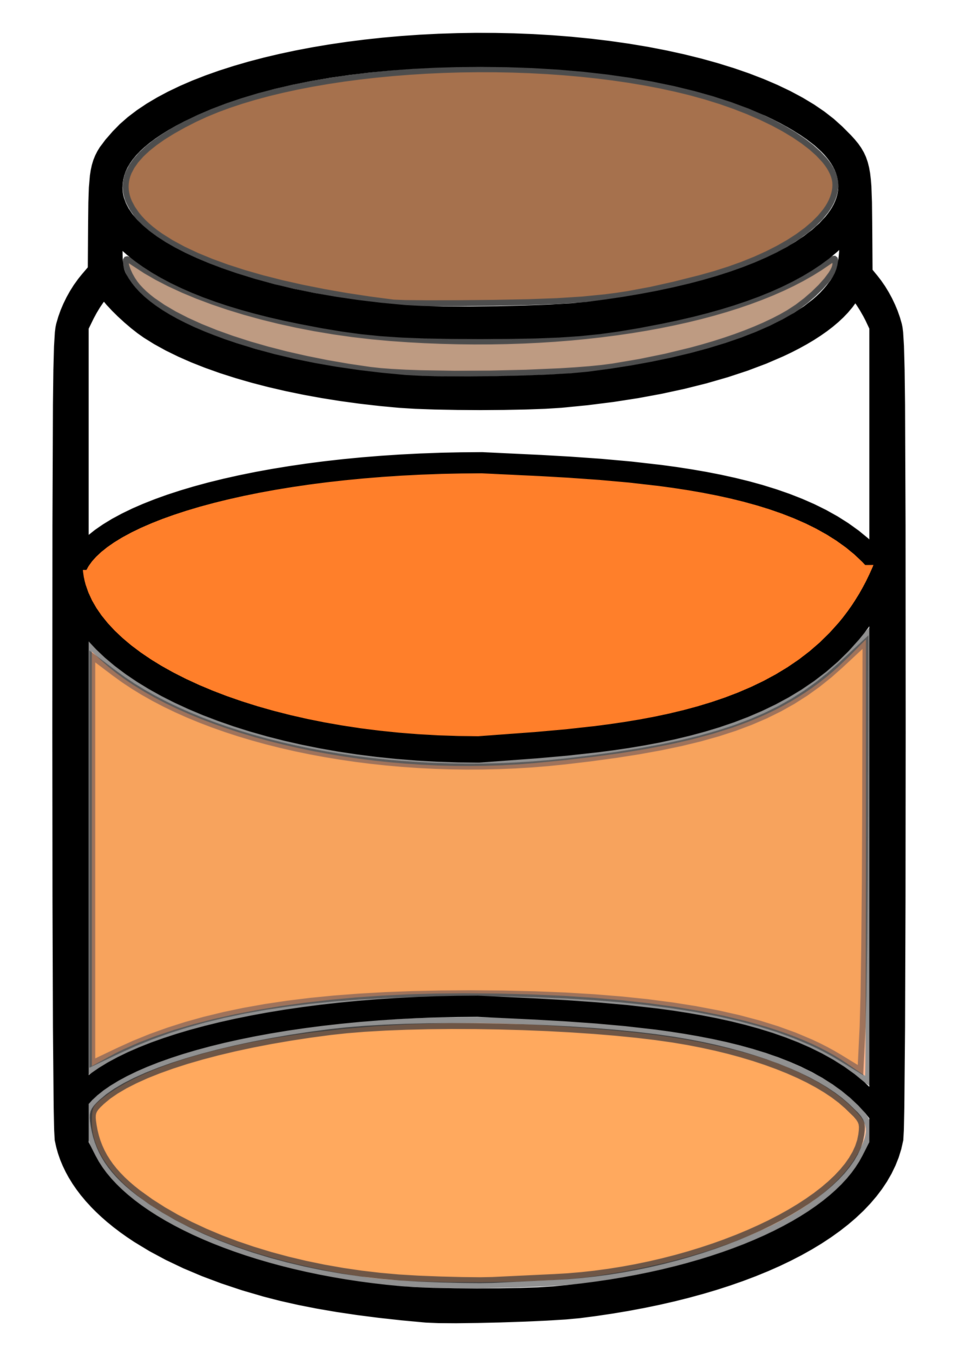 Honey Jar Clipart